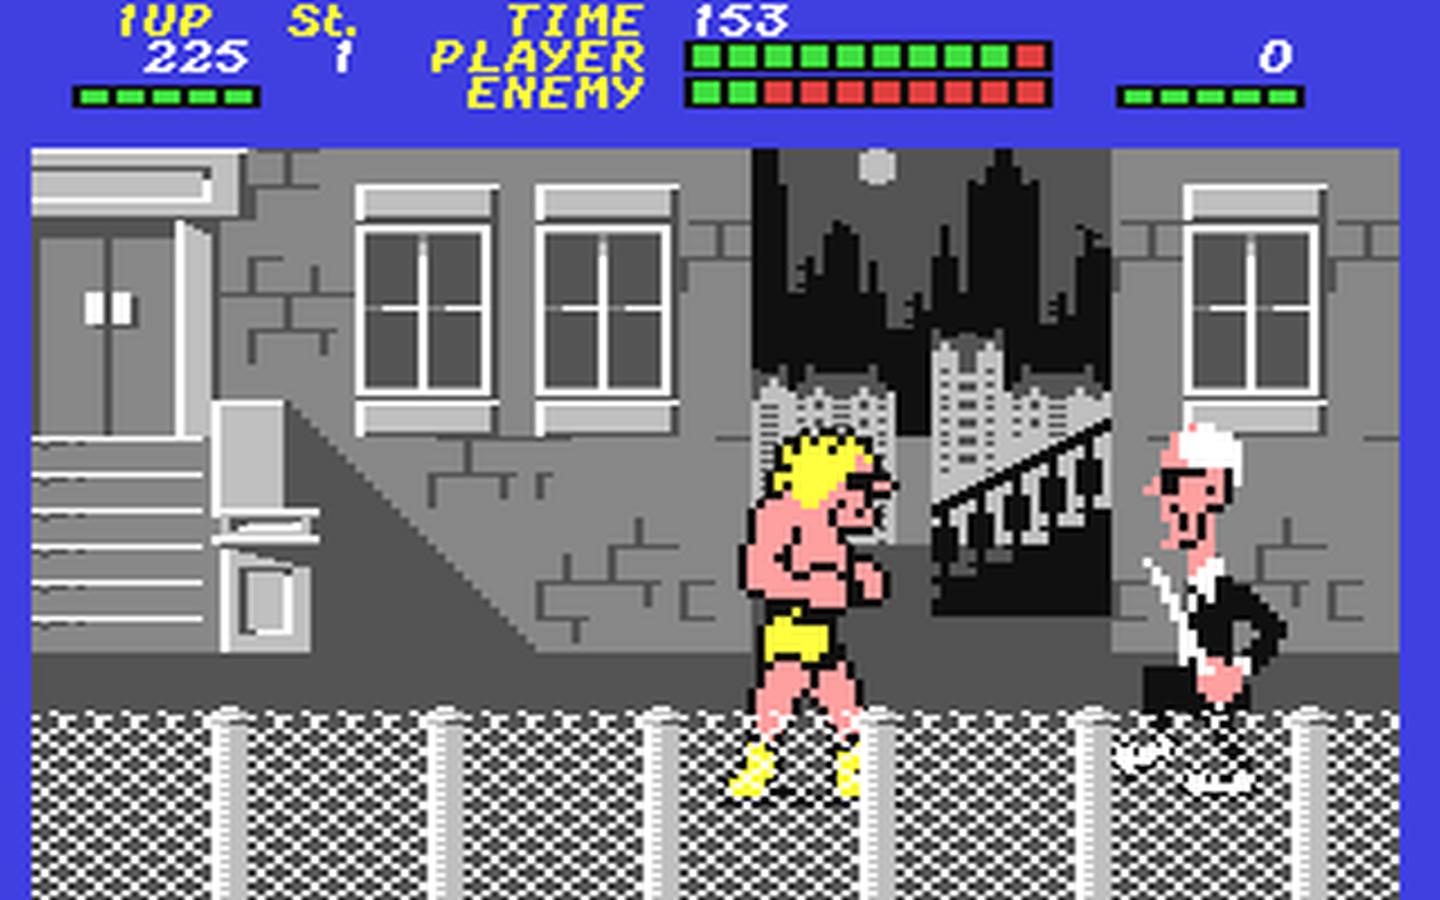 C64 GameBase Bop'n_Rumble Melbourne_House 1987